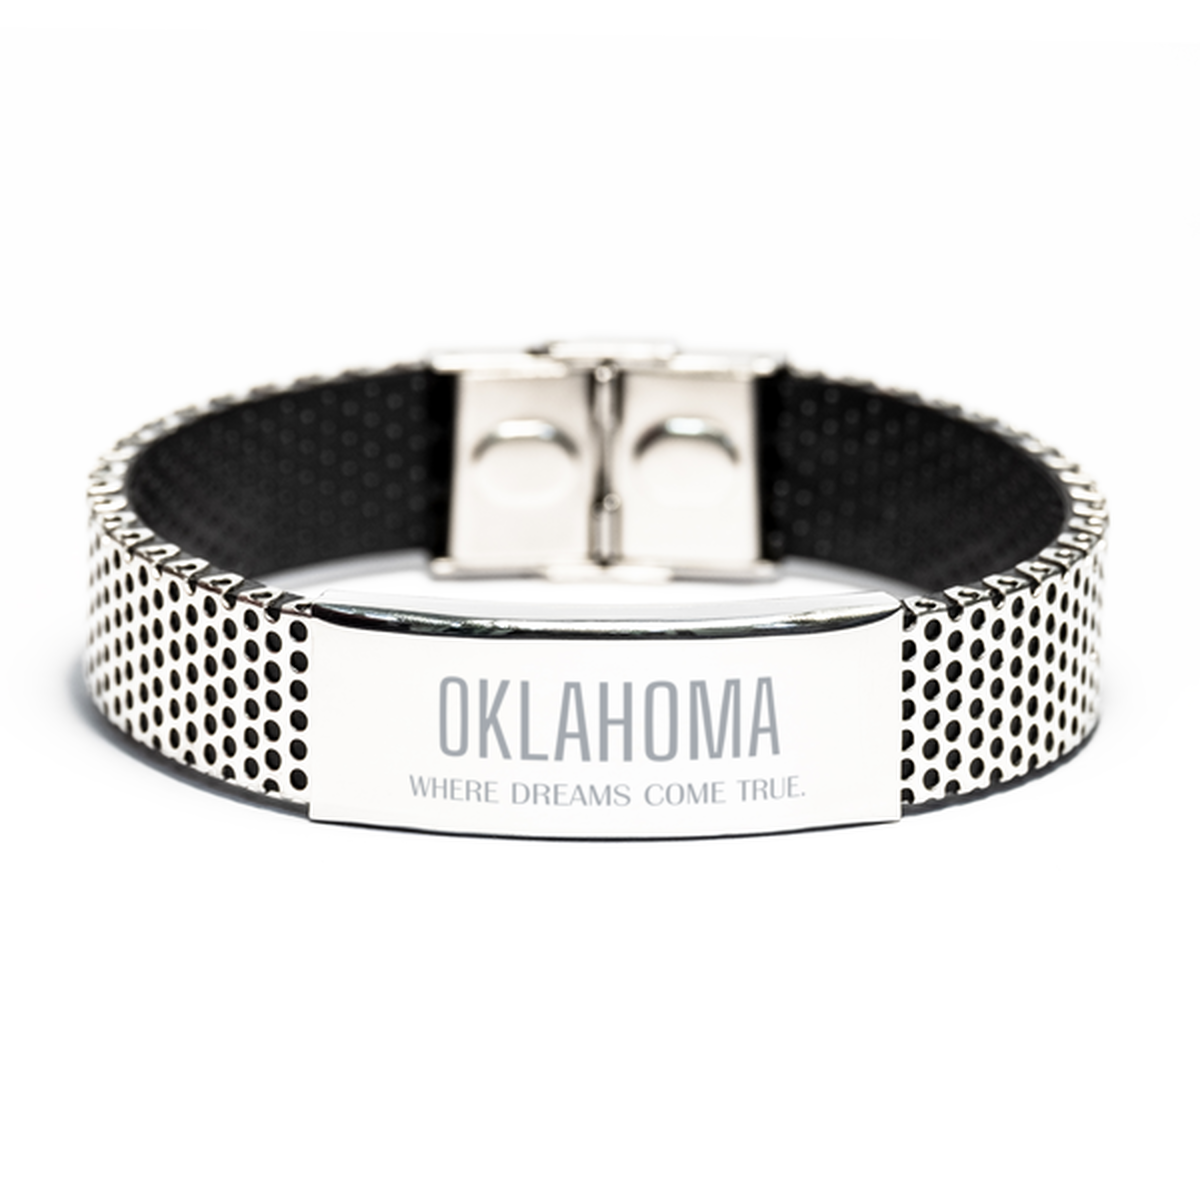 Love Oklahoma State Stainless Steel Bracelet, Oklahoma Where dreams come true, Birthday Inspirational Gifts For Oklahoma Men, Women, Friends